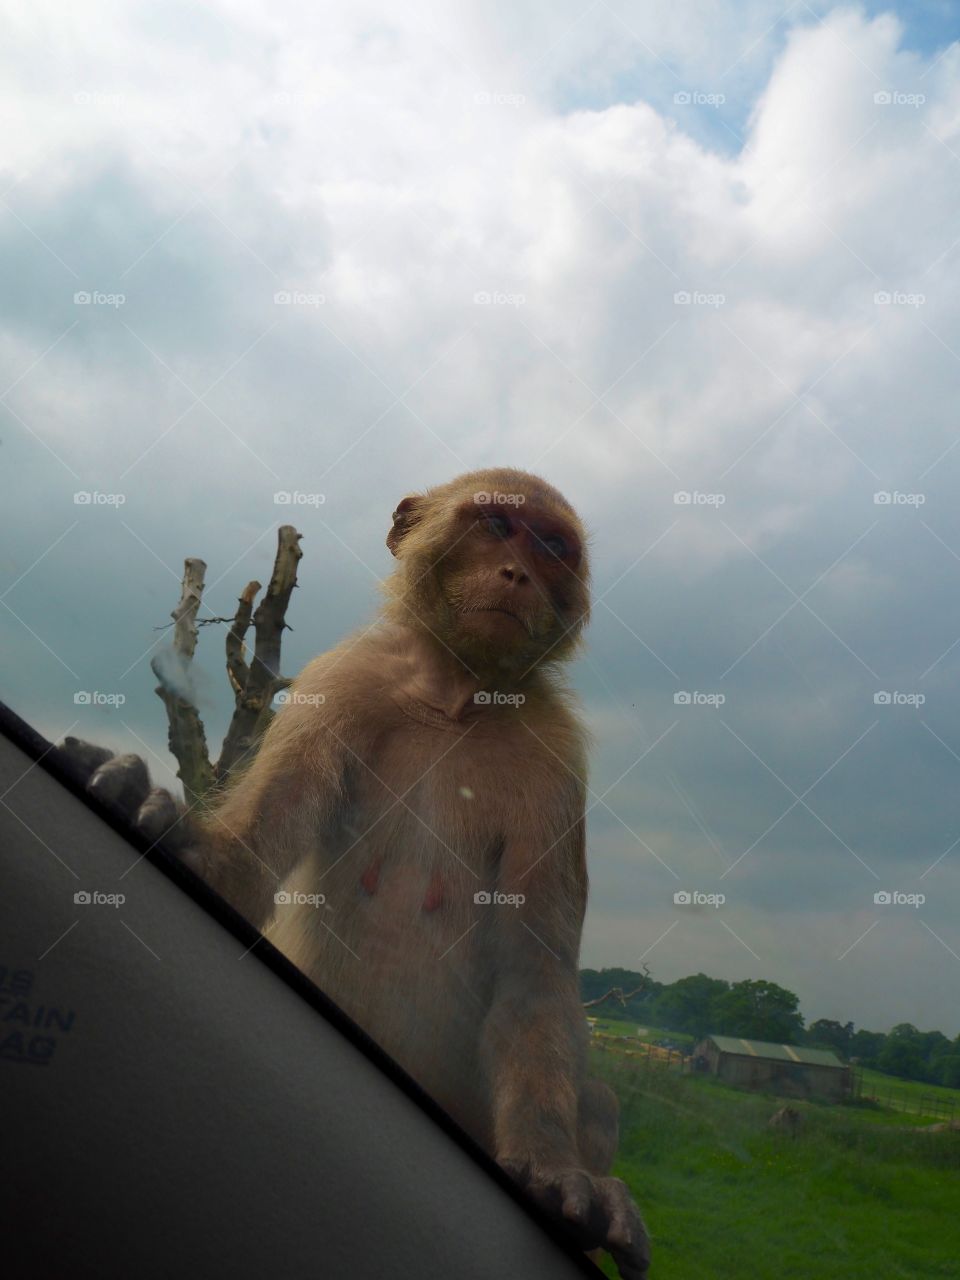 Monkey peering through car window on safari